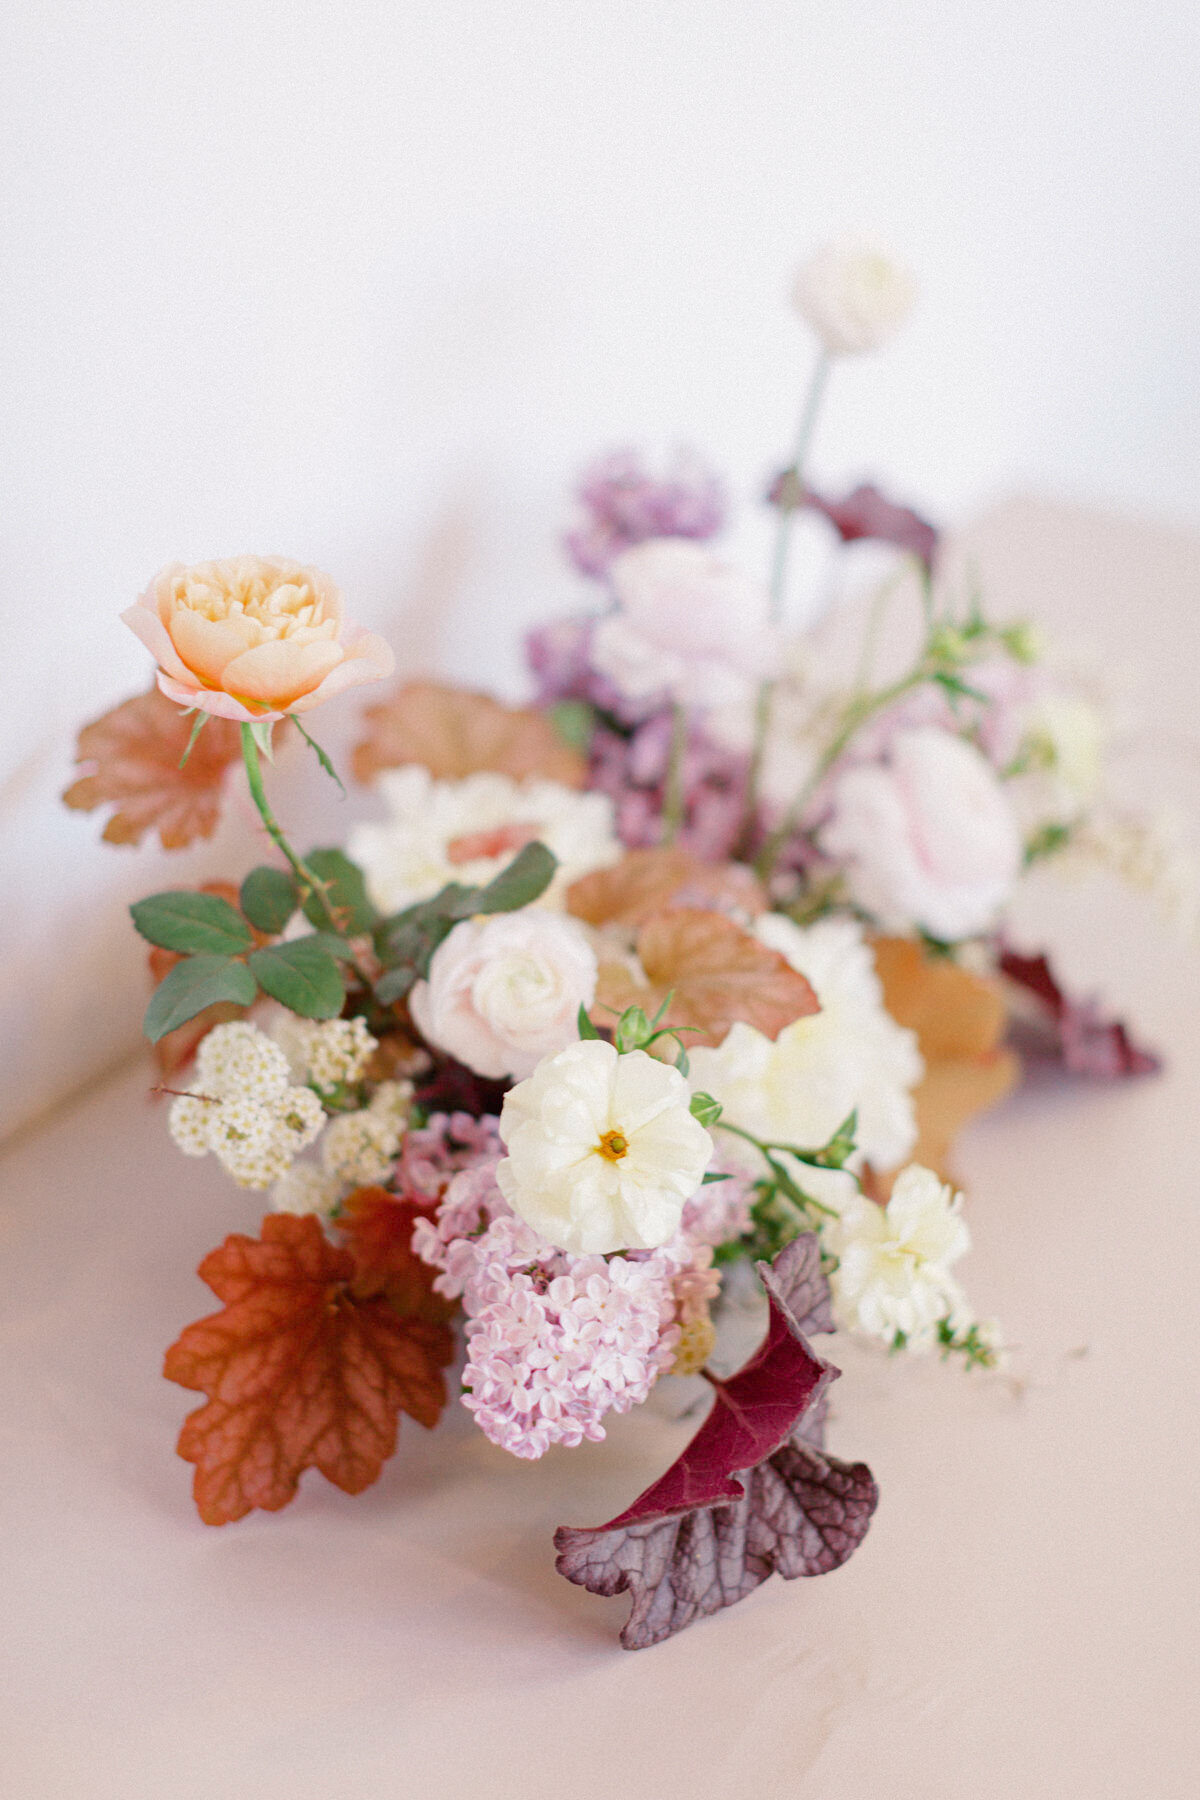 Atelier-Carmel-Wedding-Florist-GALLERY-Arrangements-46